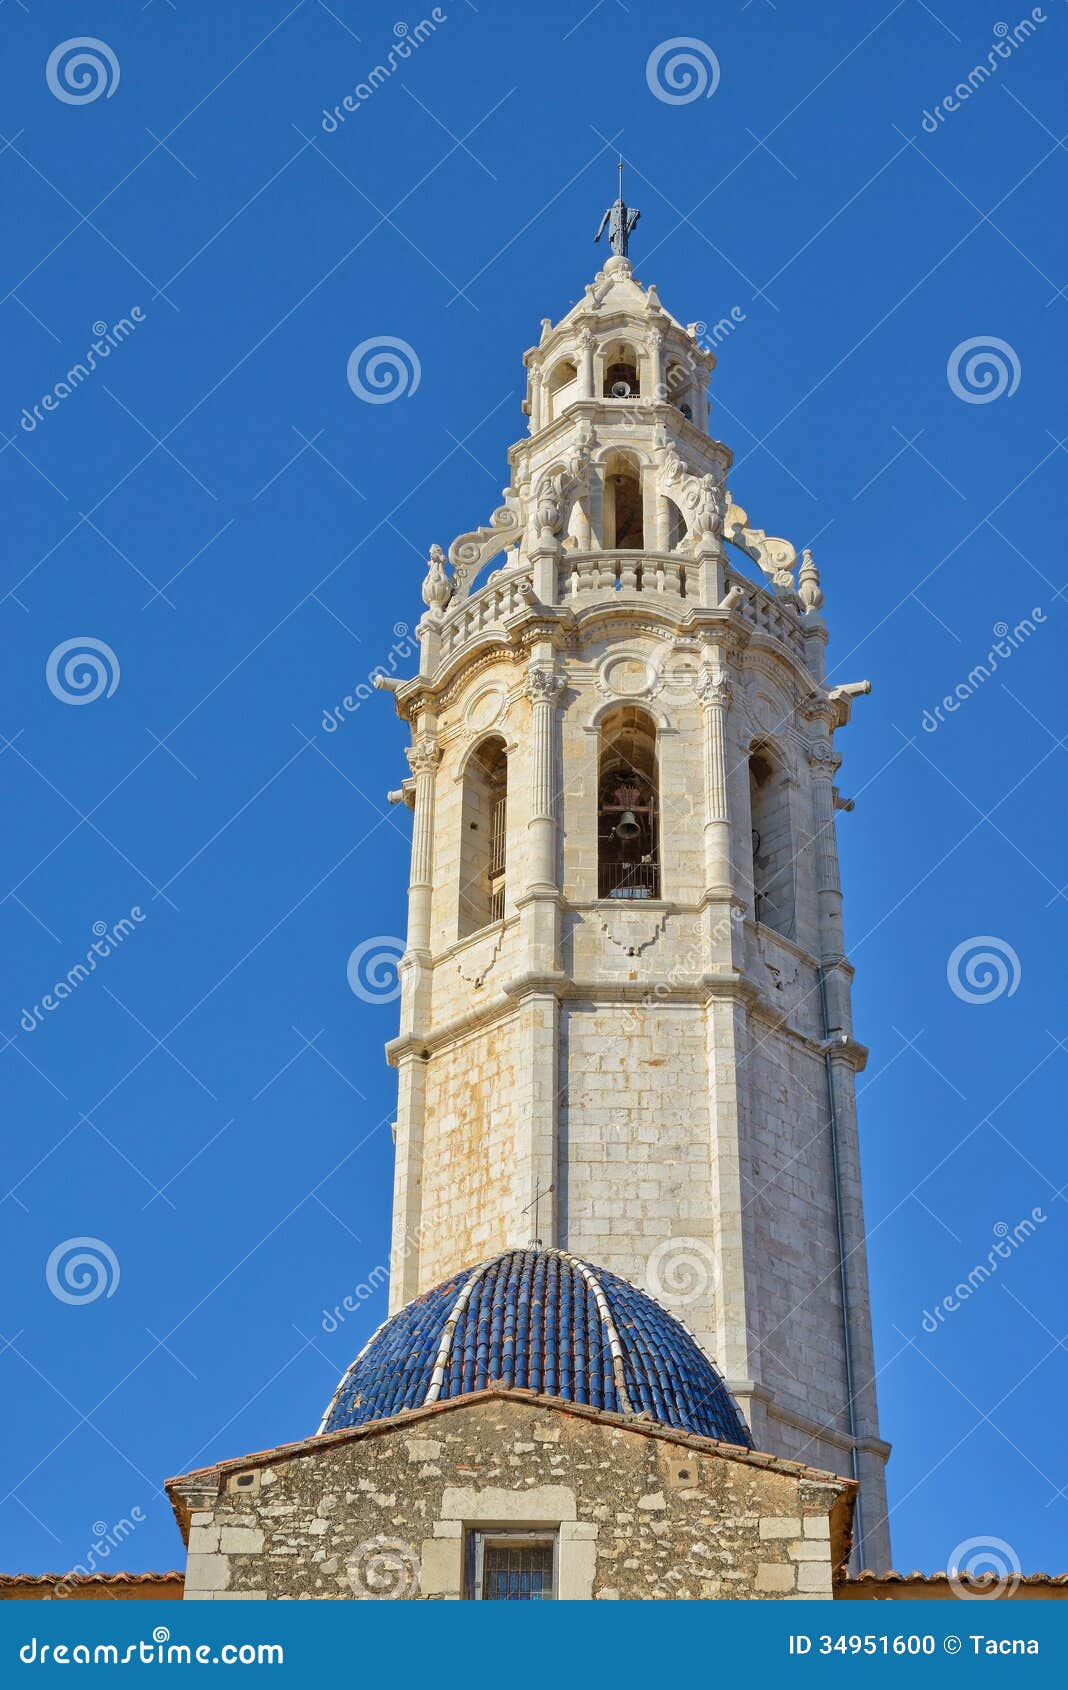  - esglesia-de-sant-joan-baptista-beautifull-bell-tower-alcala-xivert-village-valencian-community-spain-34951600